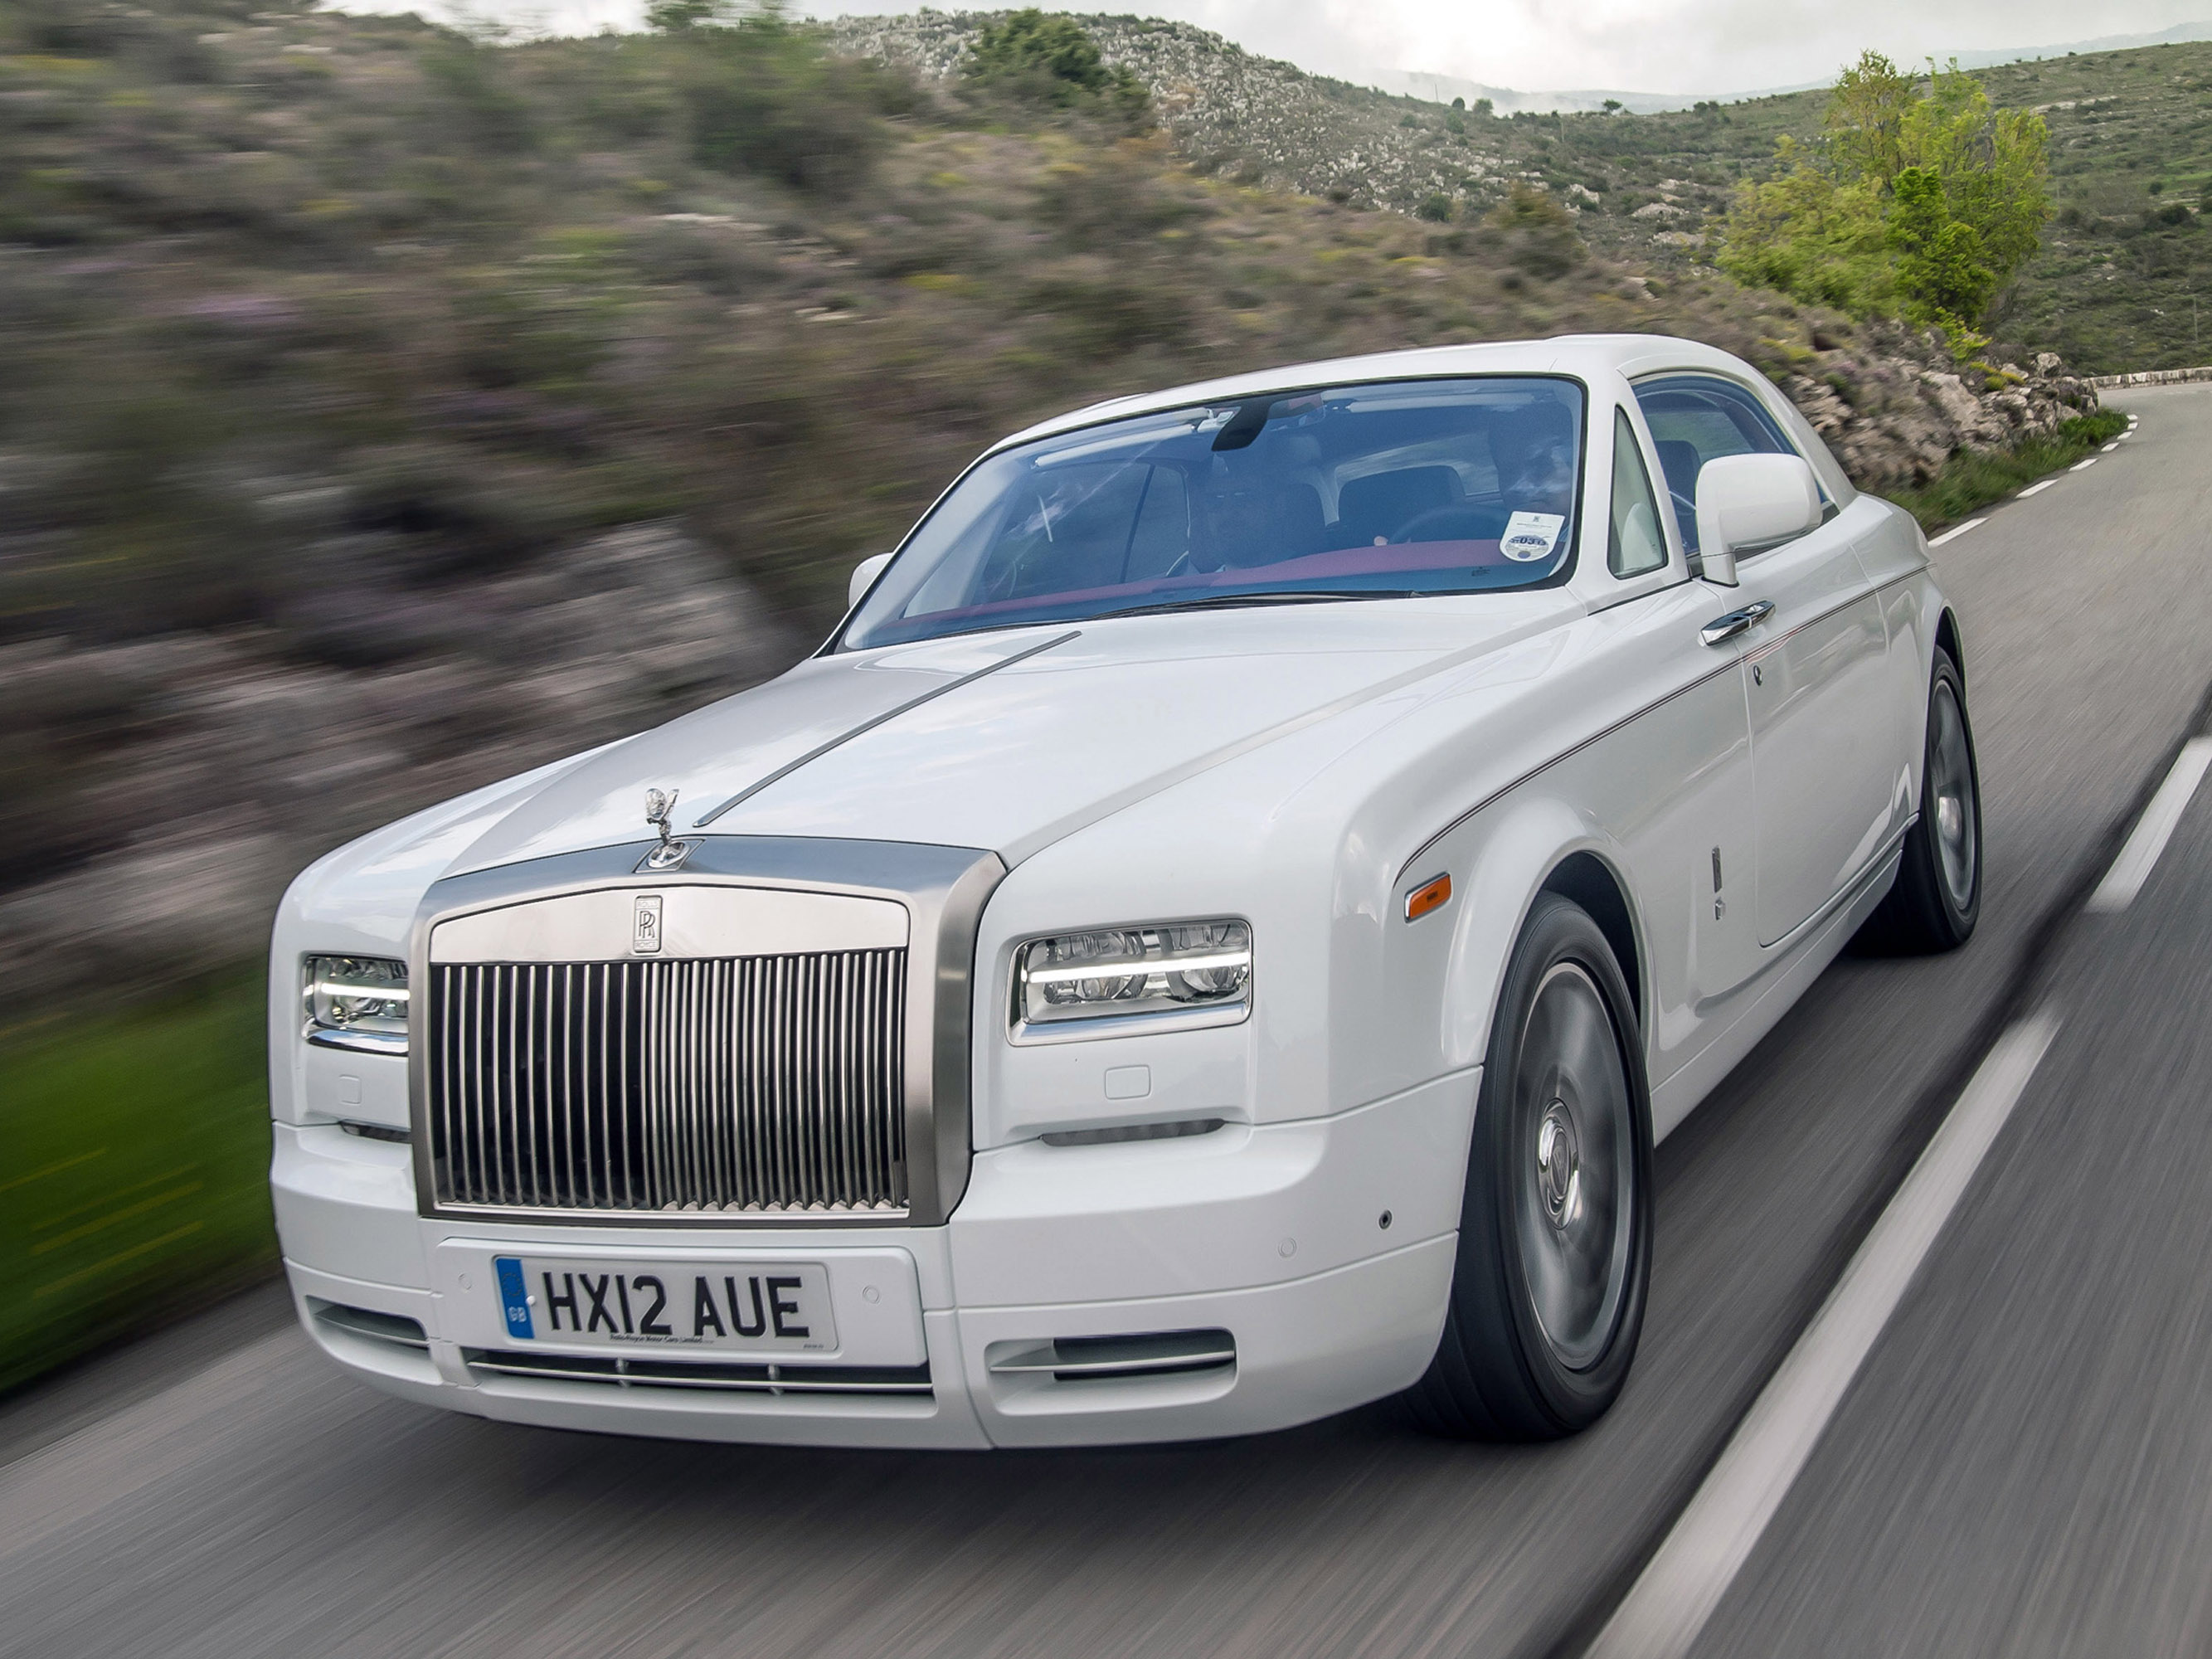 Автомобиль роллс ройс. Rolls Royce Phantom Coupe 2012. Rolls Royce Phantom Coupe. Rolls-Royce Phantom Coupe 7. Rolls Royce Phantom купе.